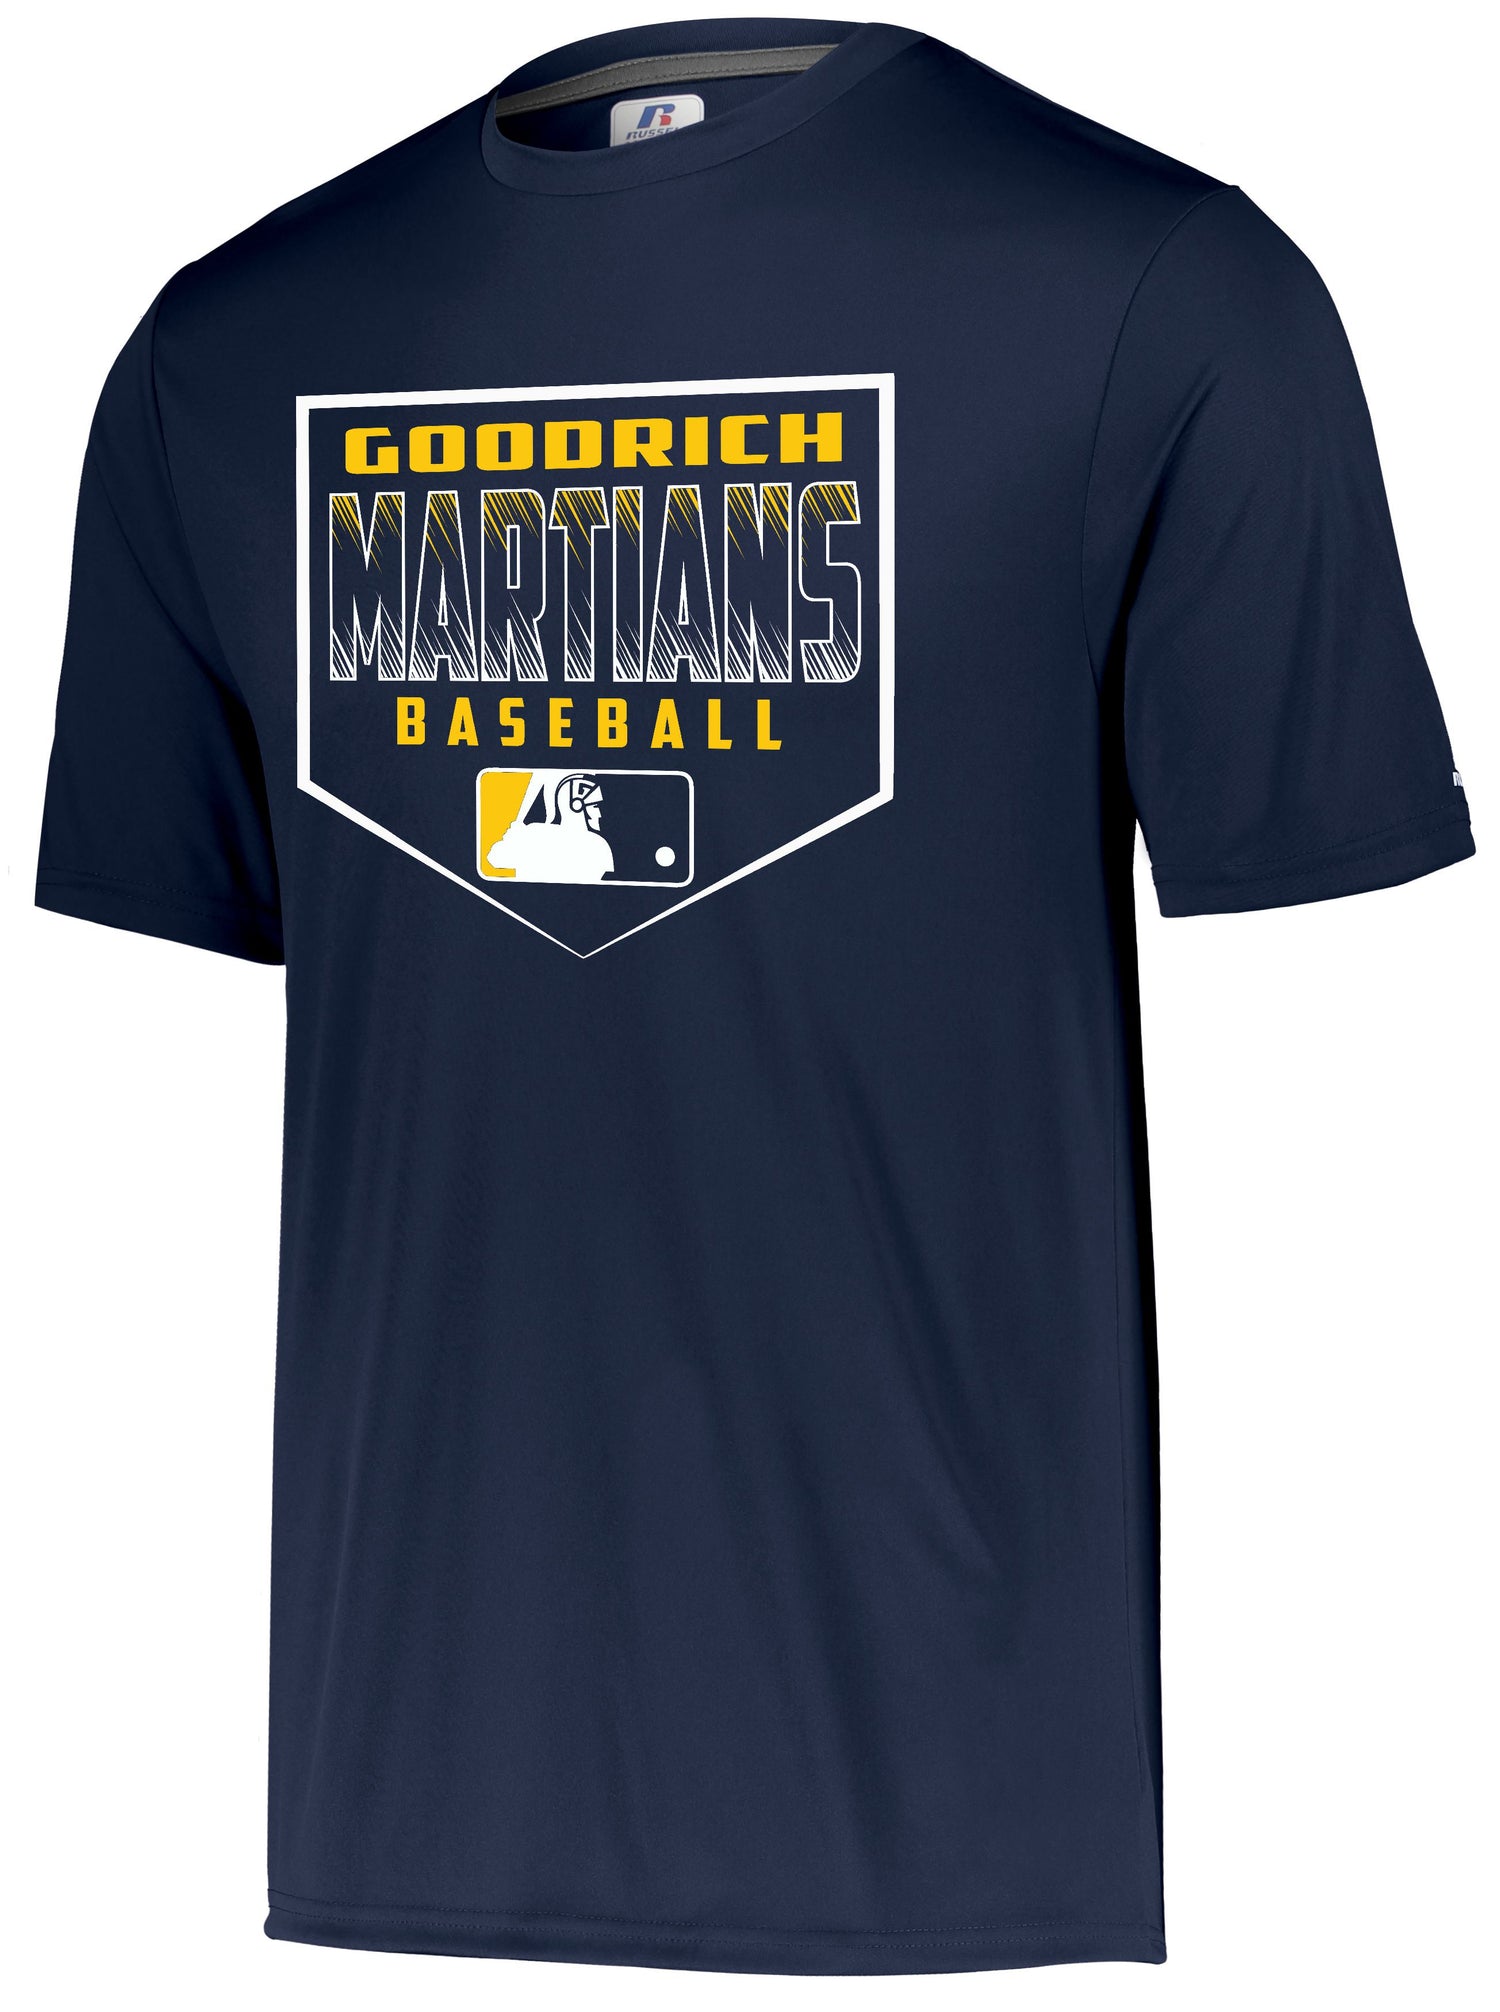 Goodrich Baseball